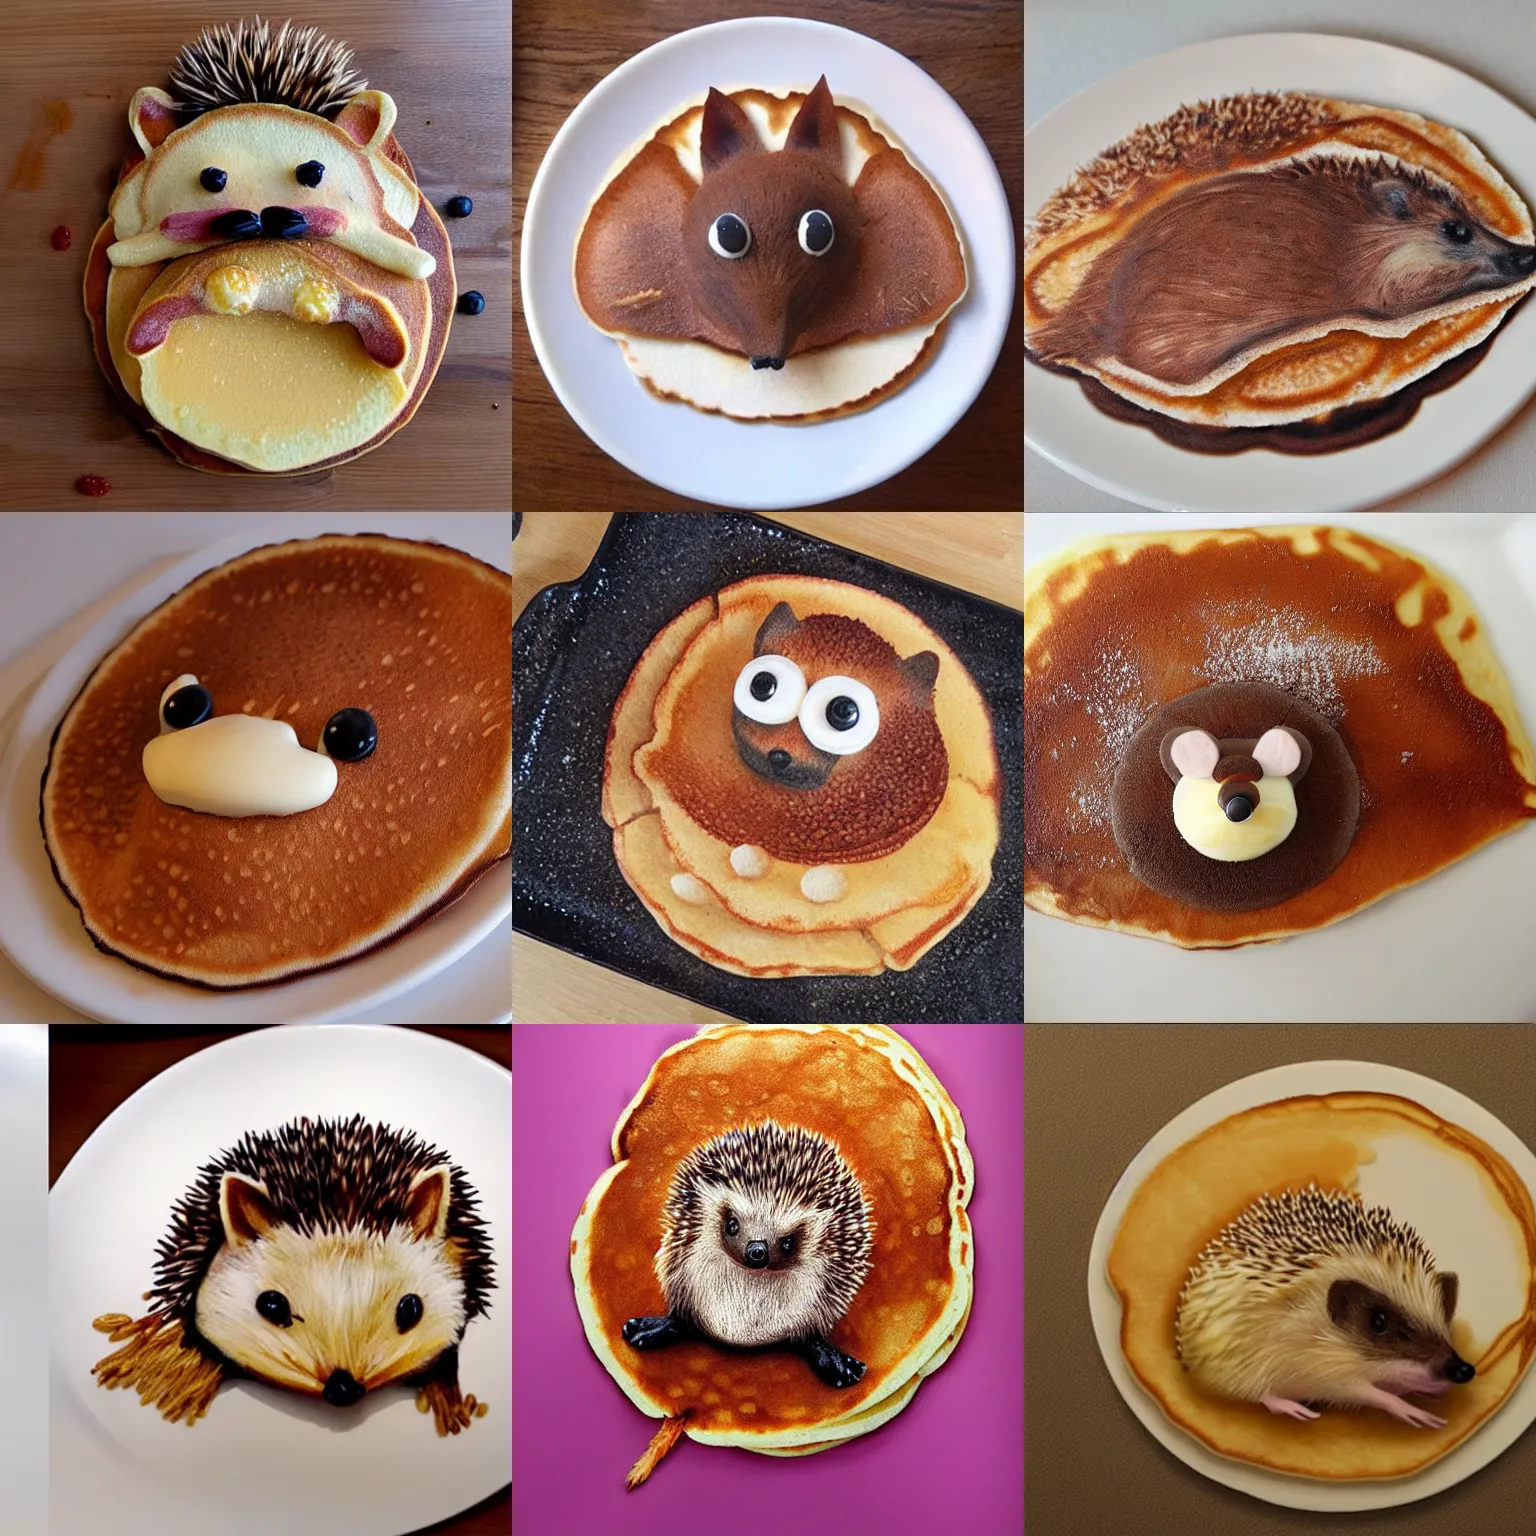 Prompt: Hedgehog pancake, hyper realistic